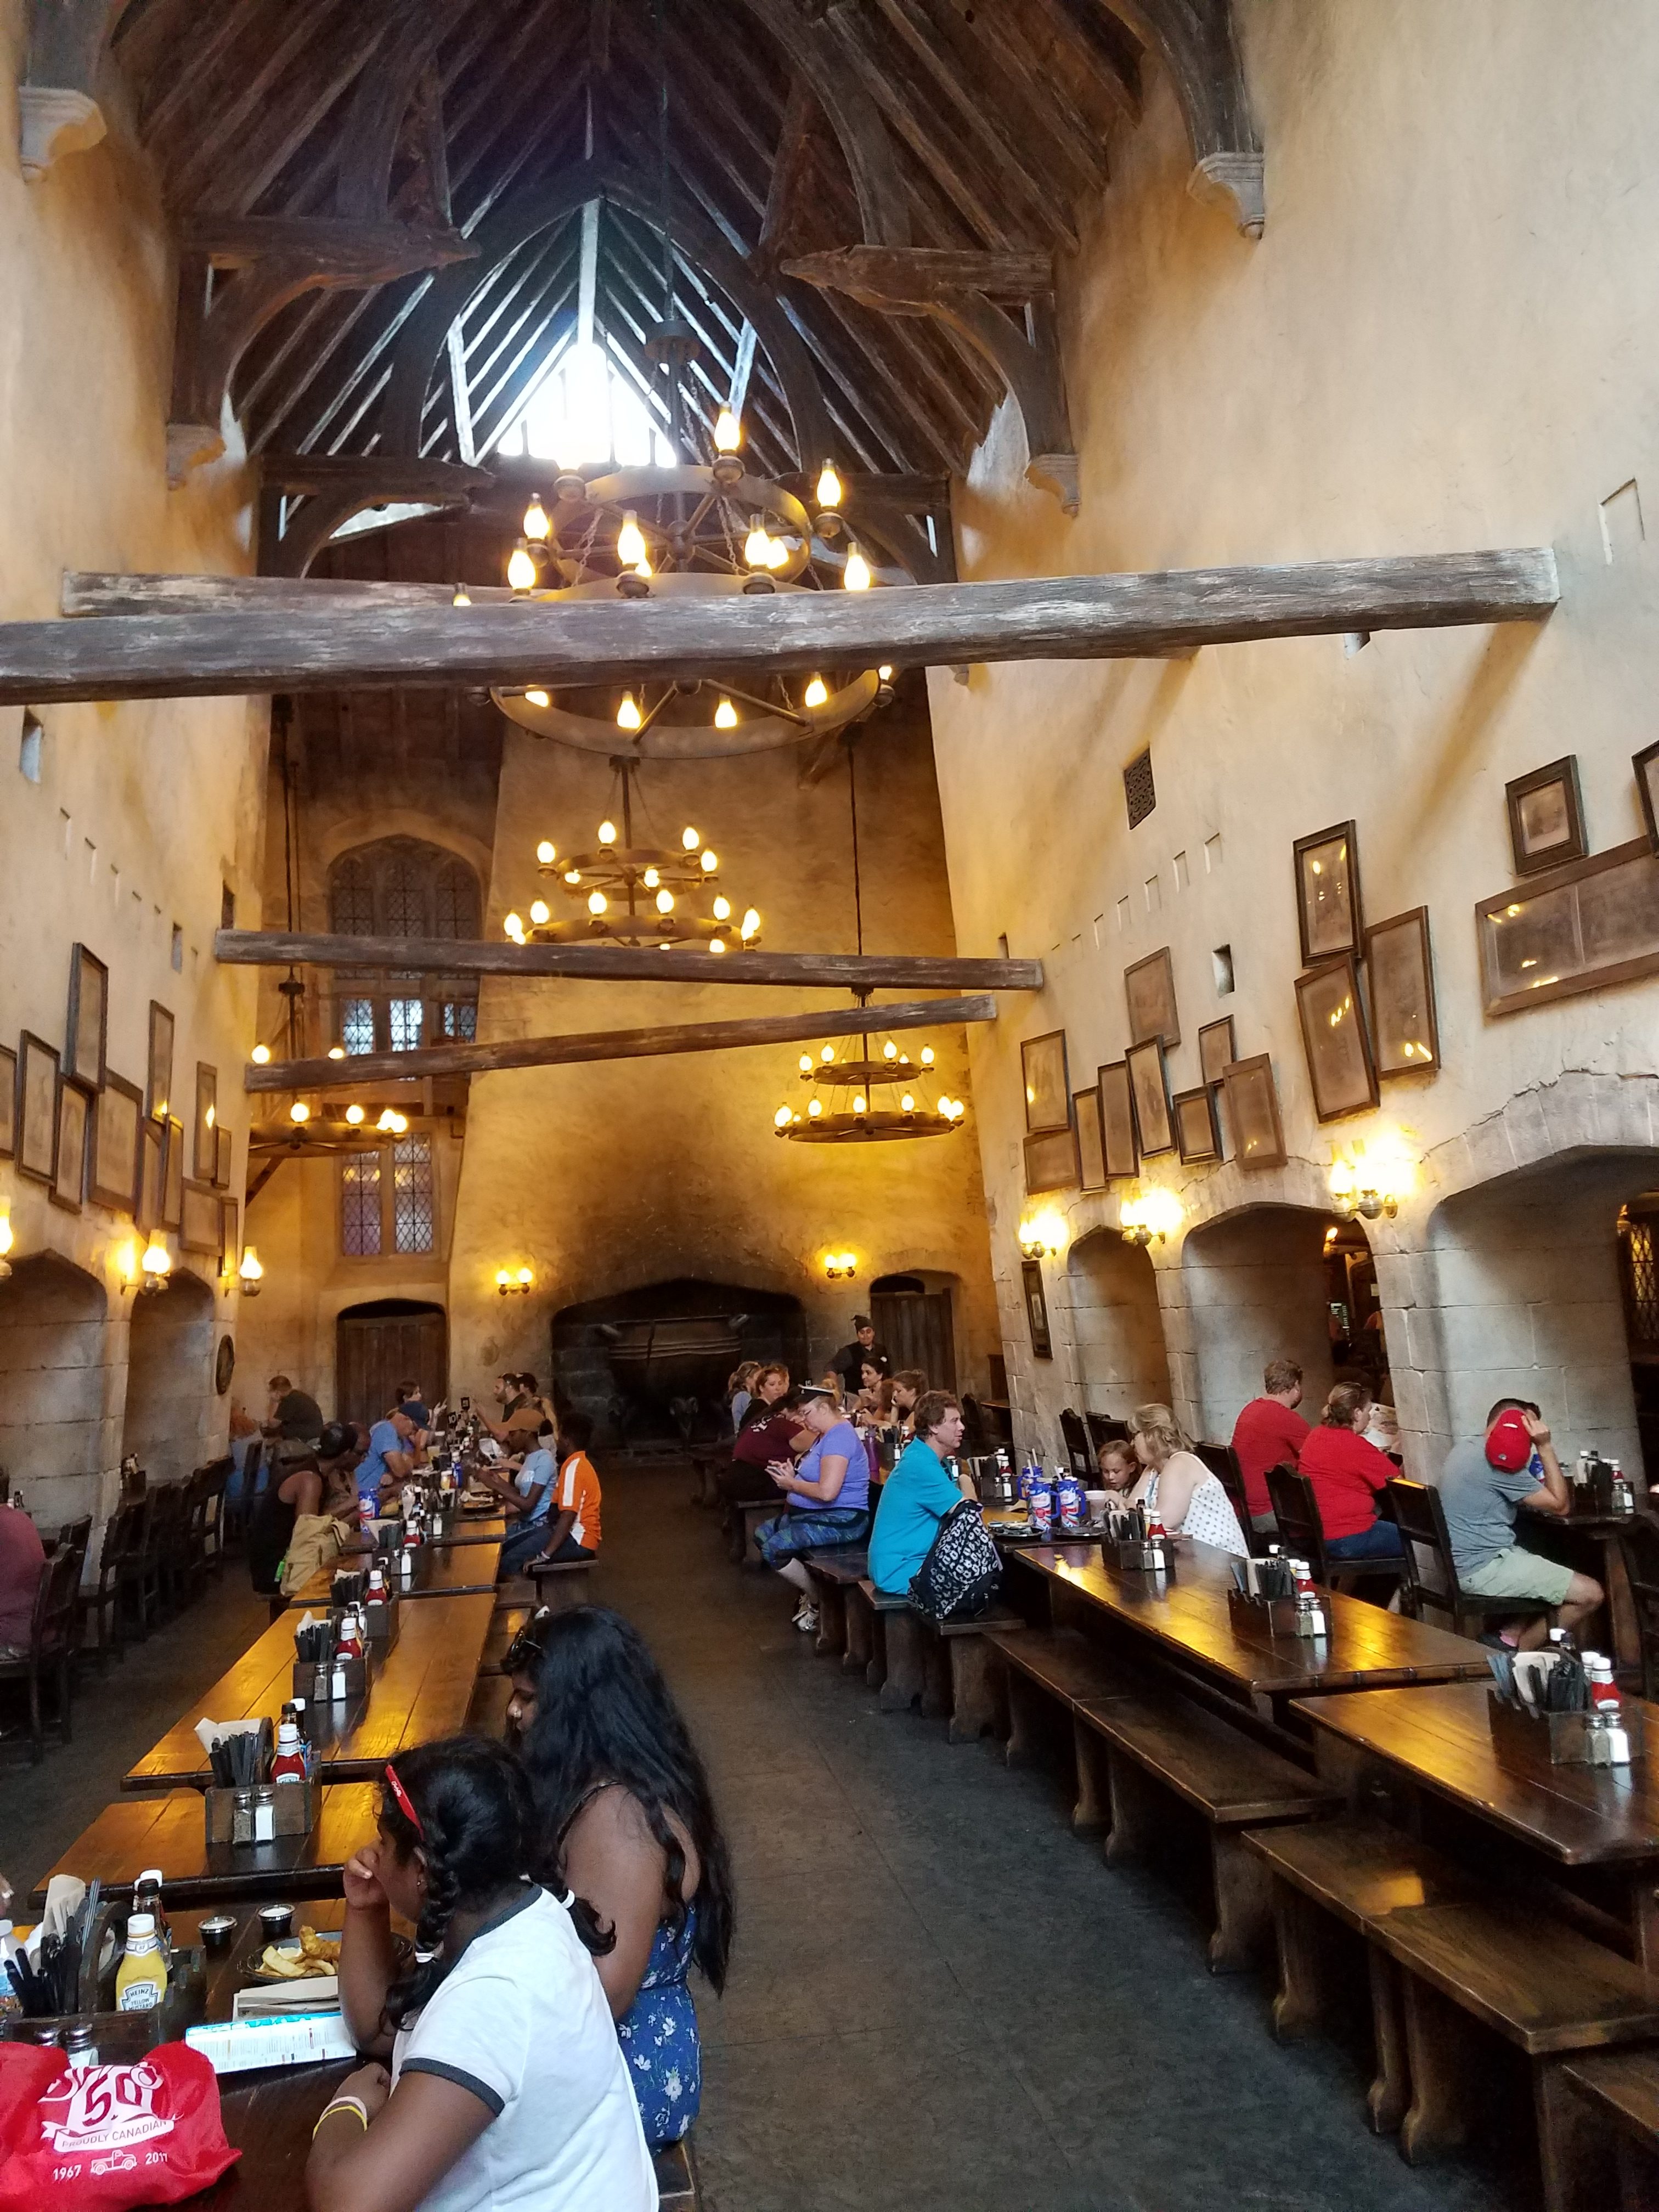 Restaurant dining room - Leaky Cauldron - Universal Studios Orlando - - by unofficialuniversal.com.